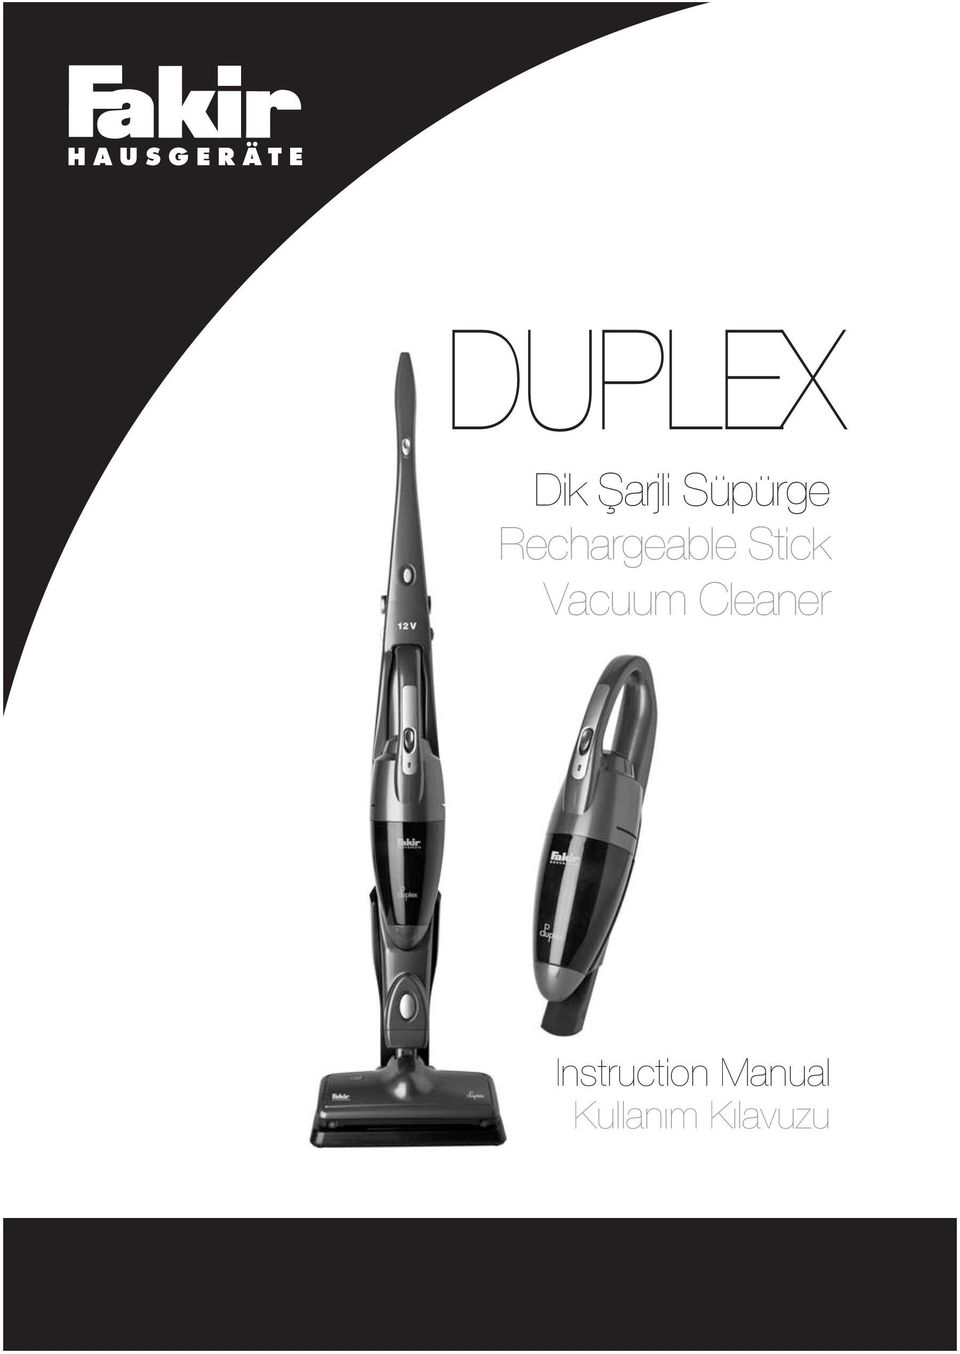 DUPLEX. Dik fiarjli Süpürge Rechargeable Stick Vacuum Cleaner. Instruction  Manual Kullan m K lavuzu - PDF Ücretsiz indirin